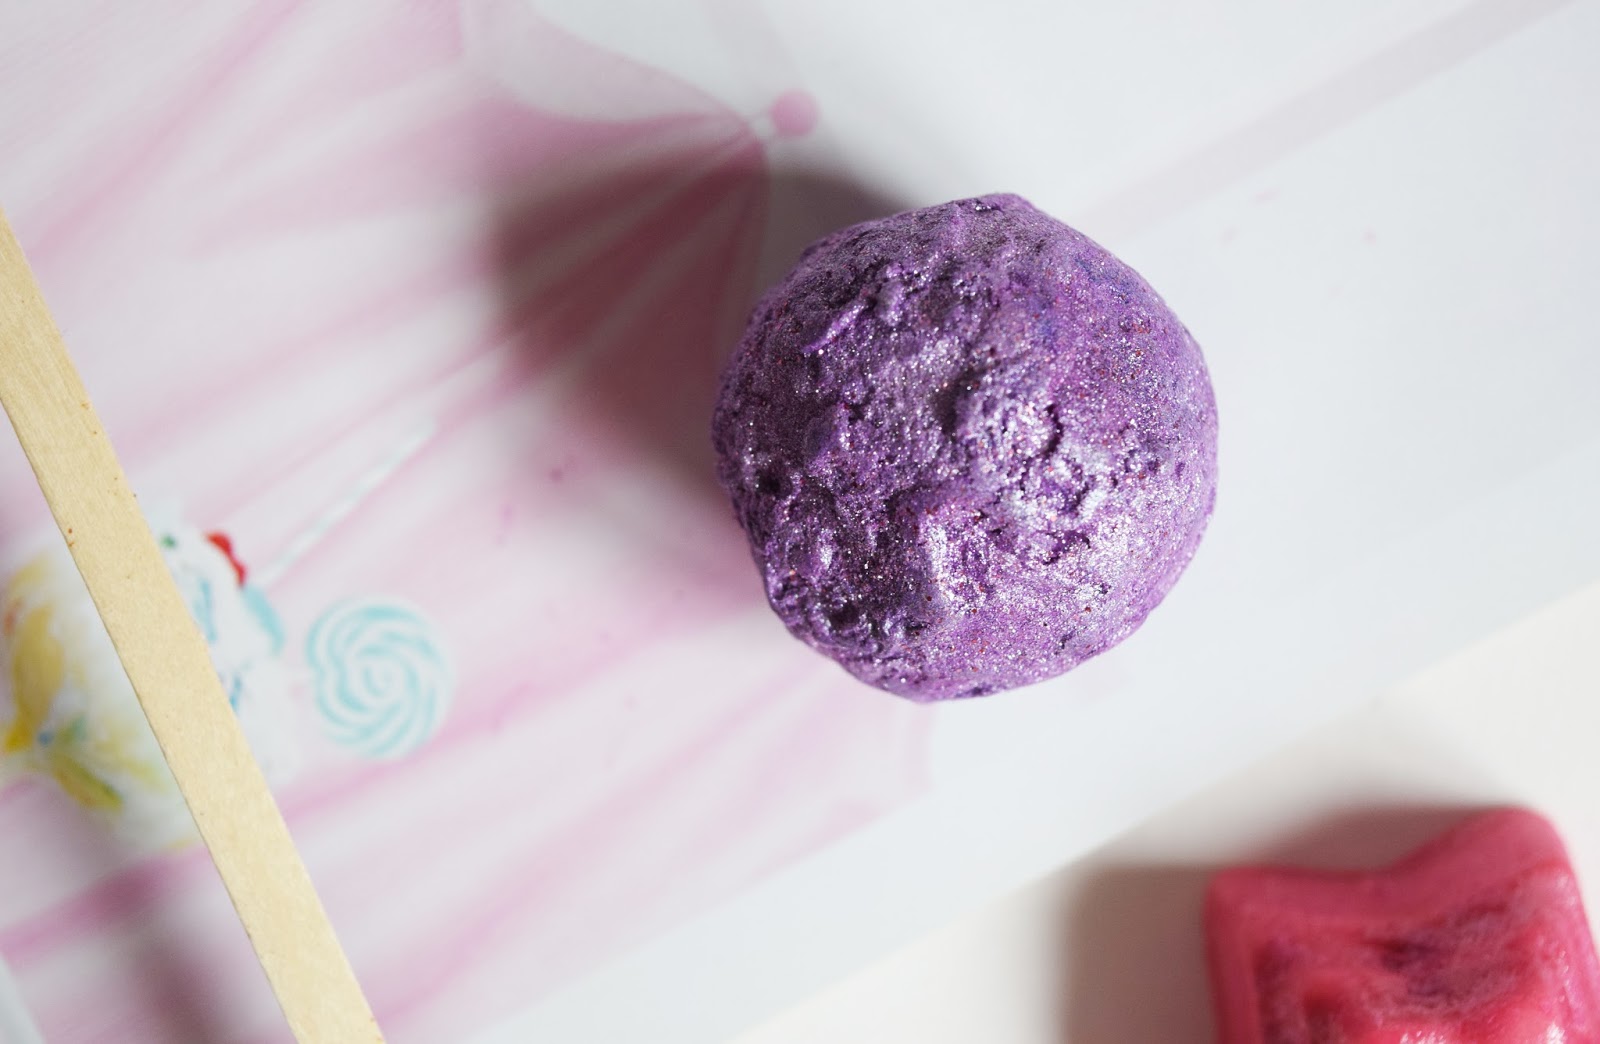 a close up shot of the purple bath oil ball